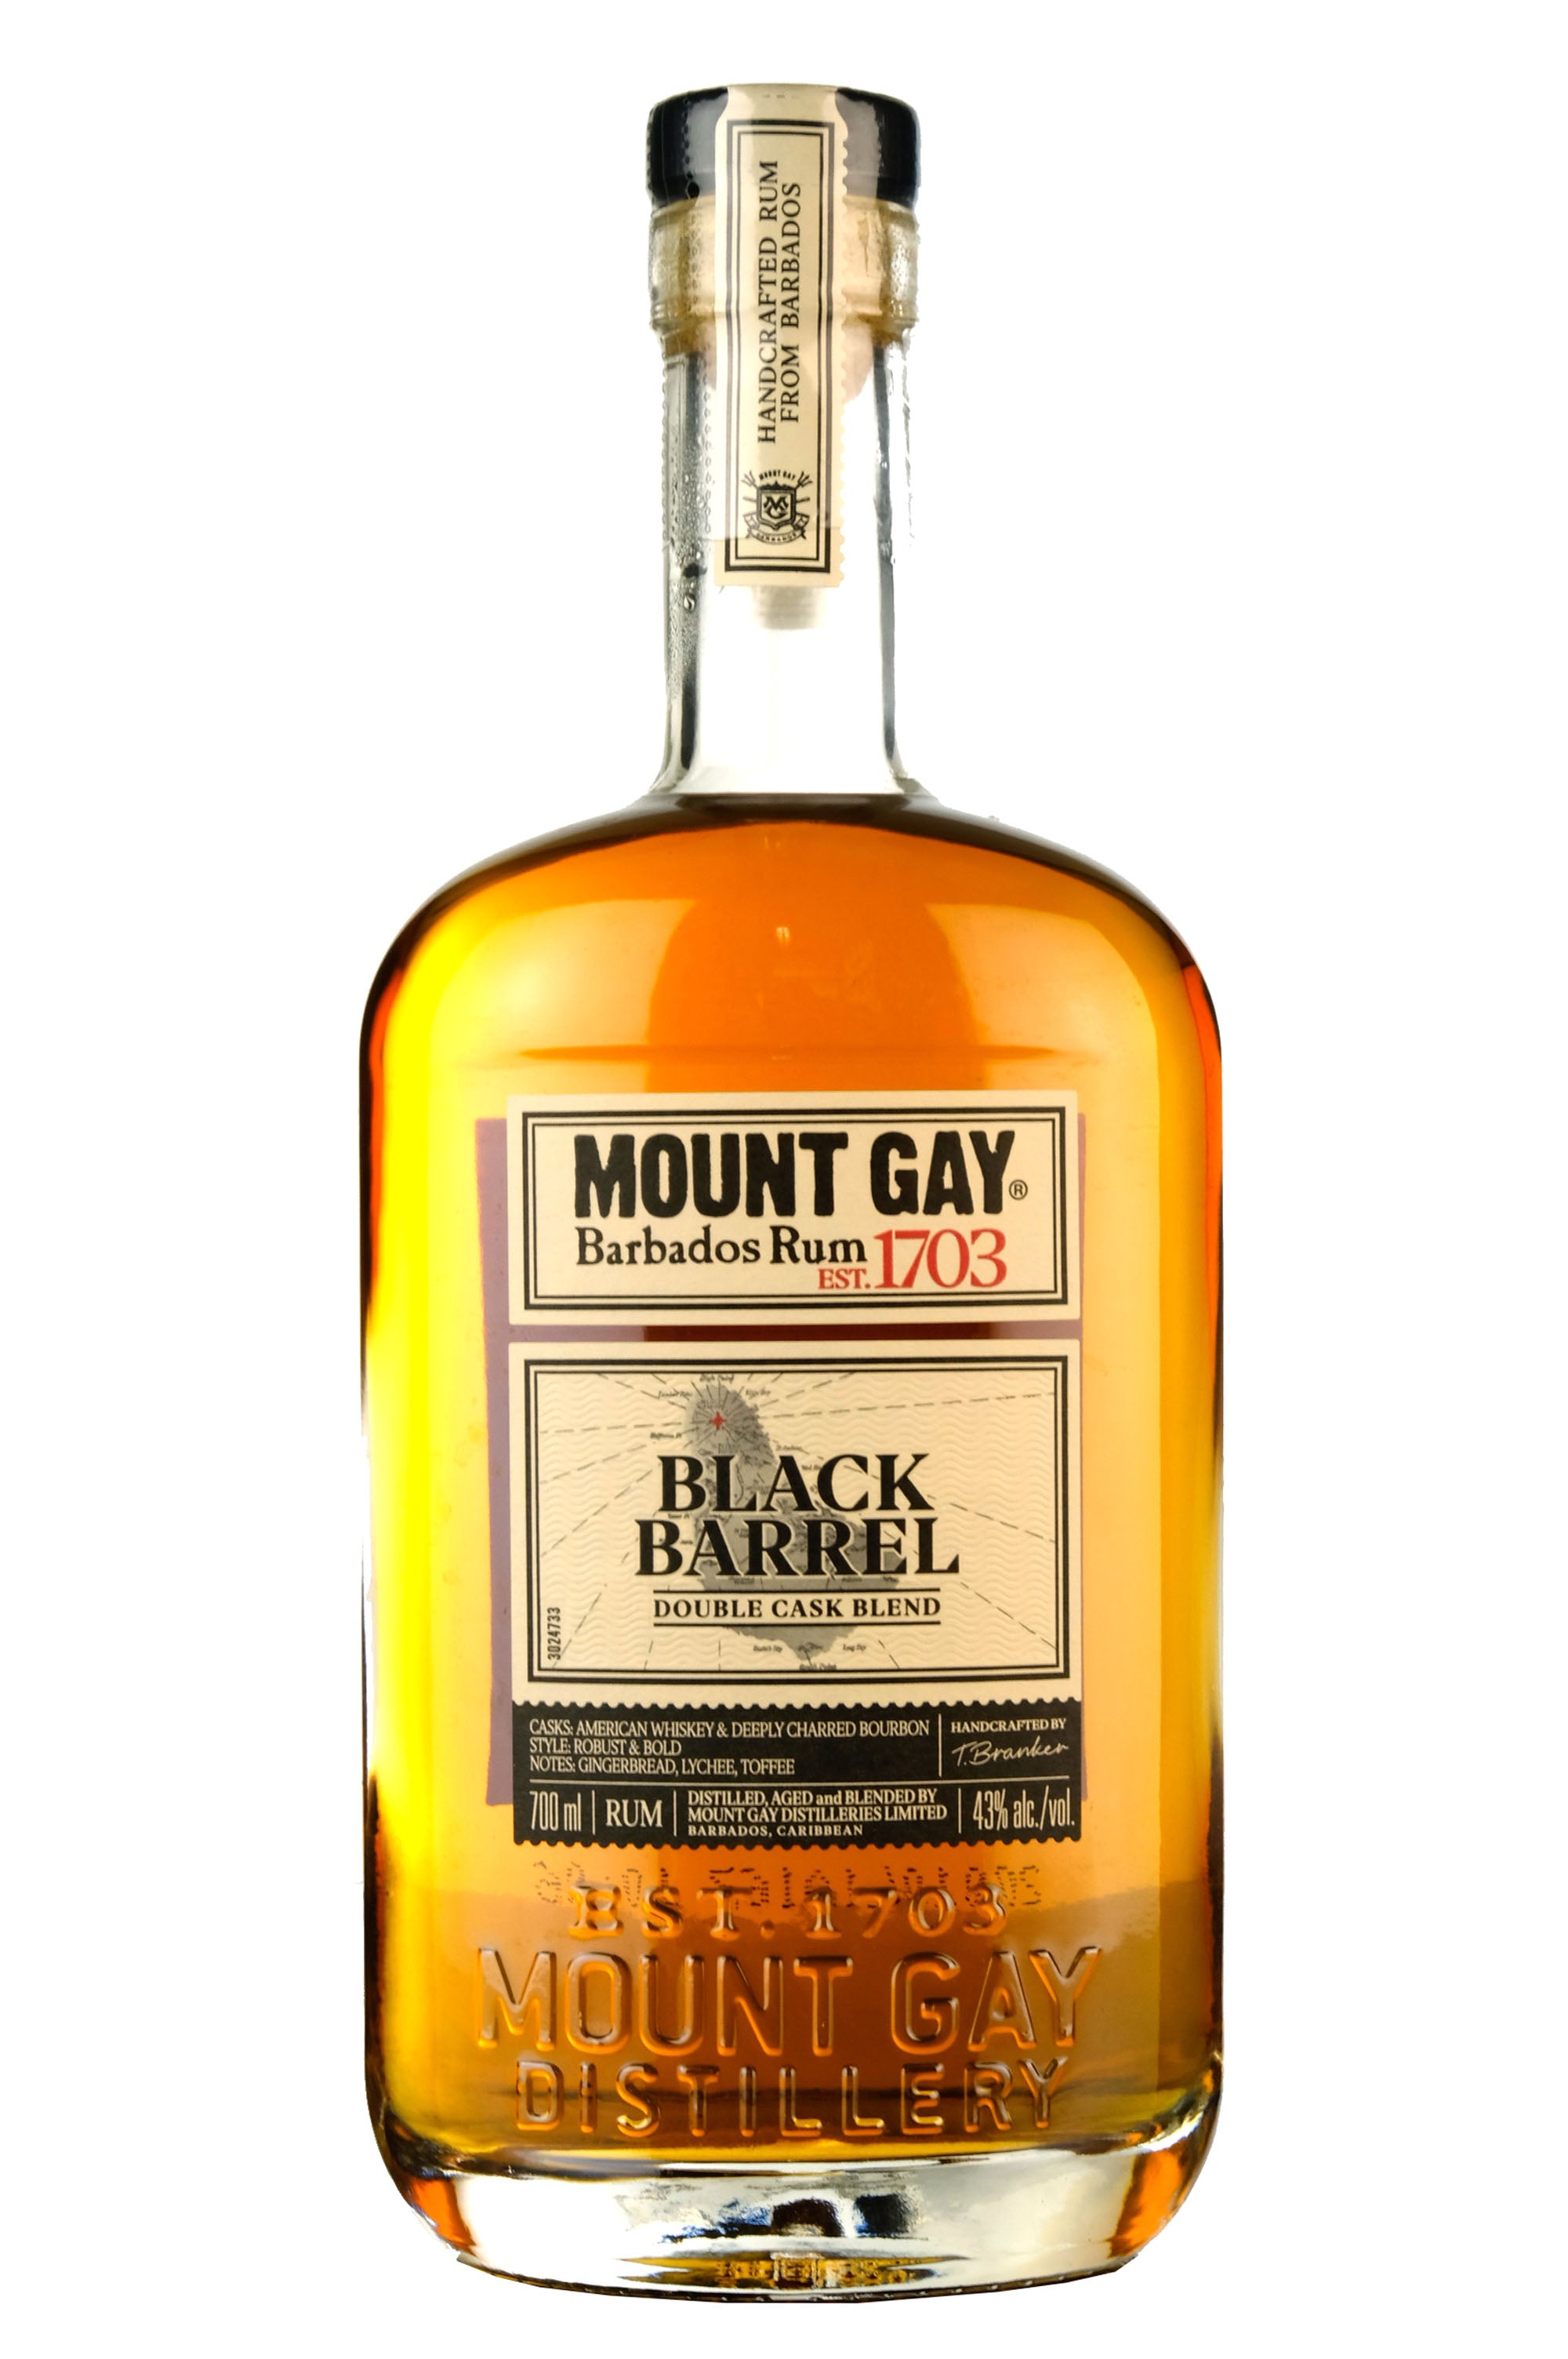 Mount Gay Black Barrel Double Cask Blend Rum